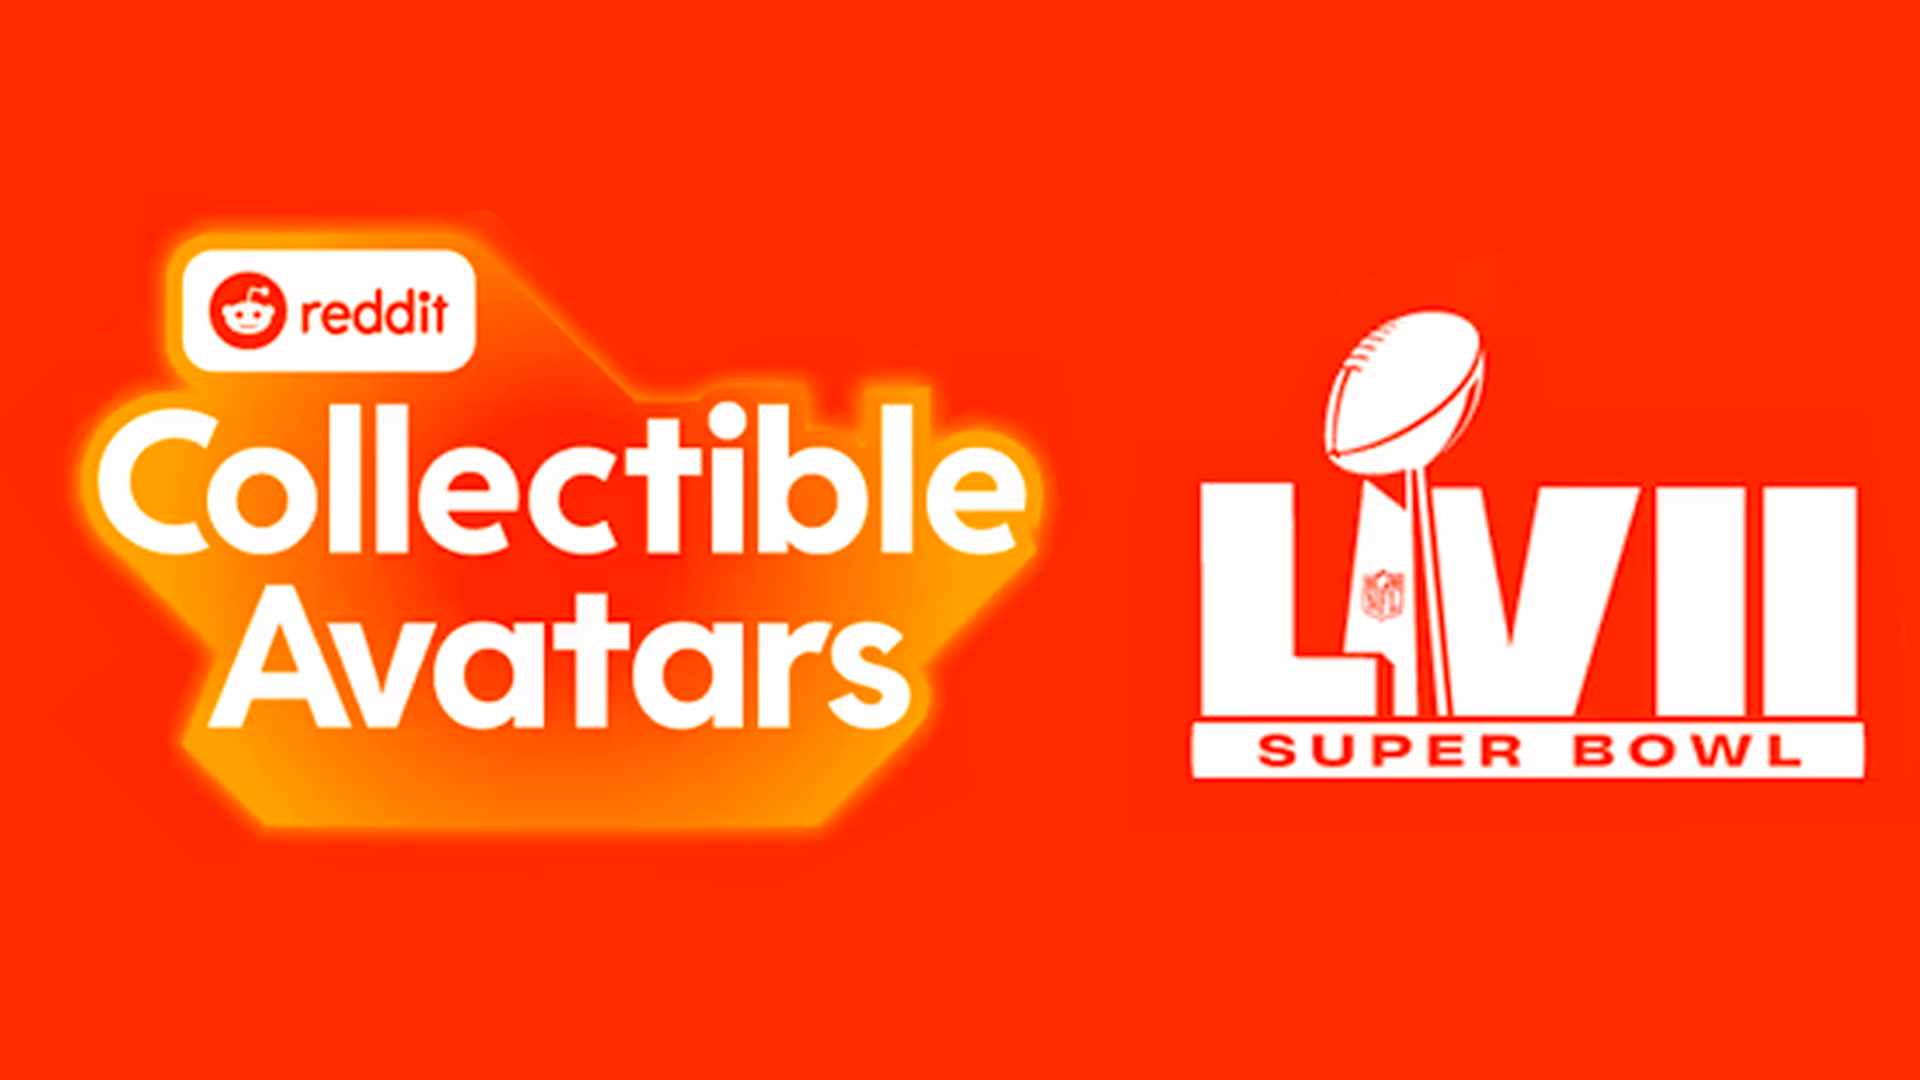 Reddit and NFL Drop Super Bowl LVII Collectible Avatars